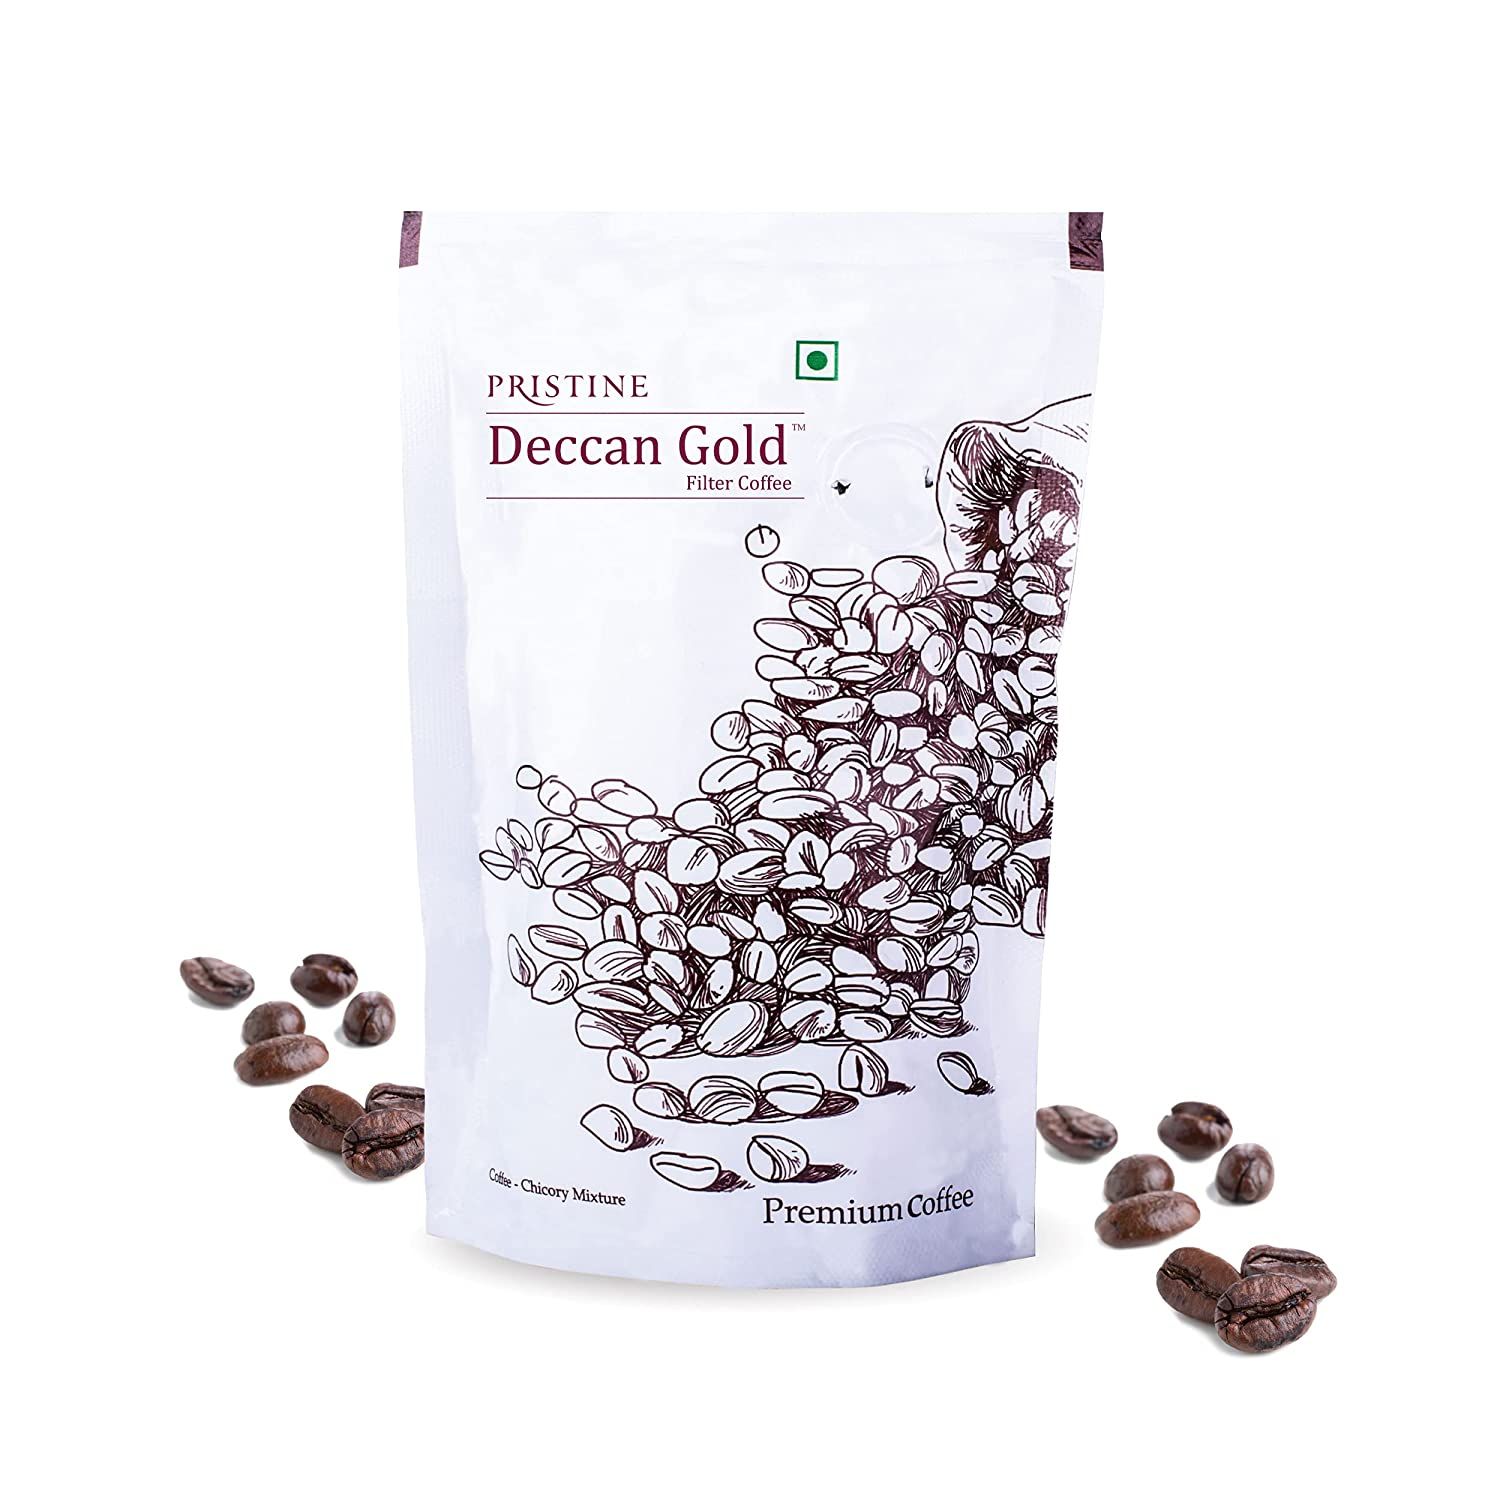 Pristine Deccan Gold Premium Filter Coffee 80:20 Powder Image